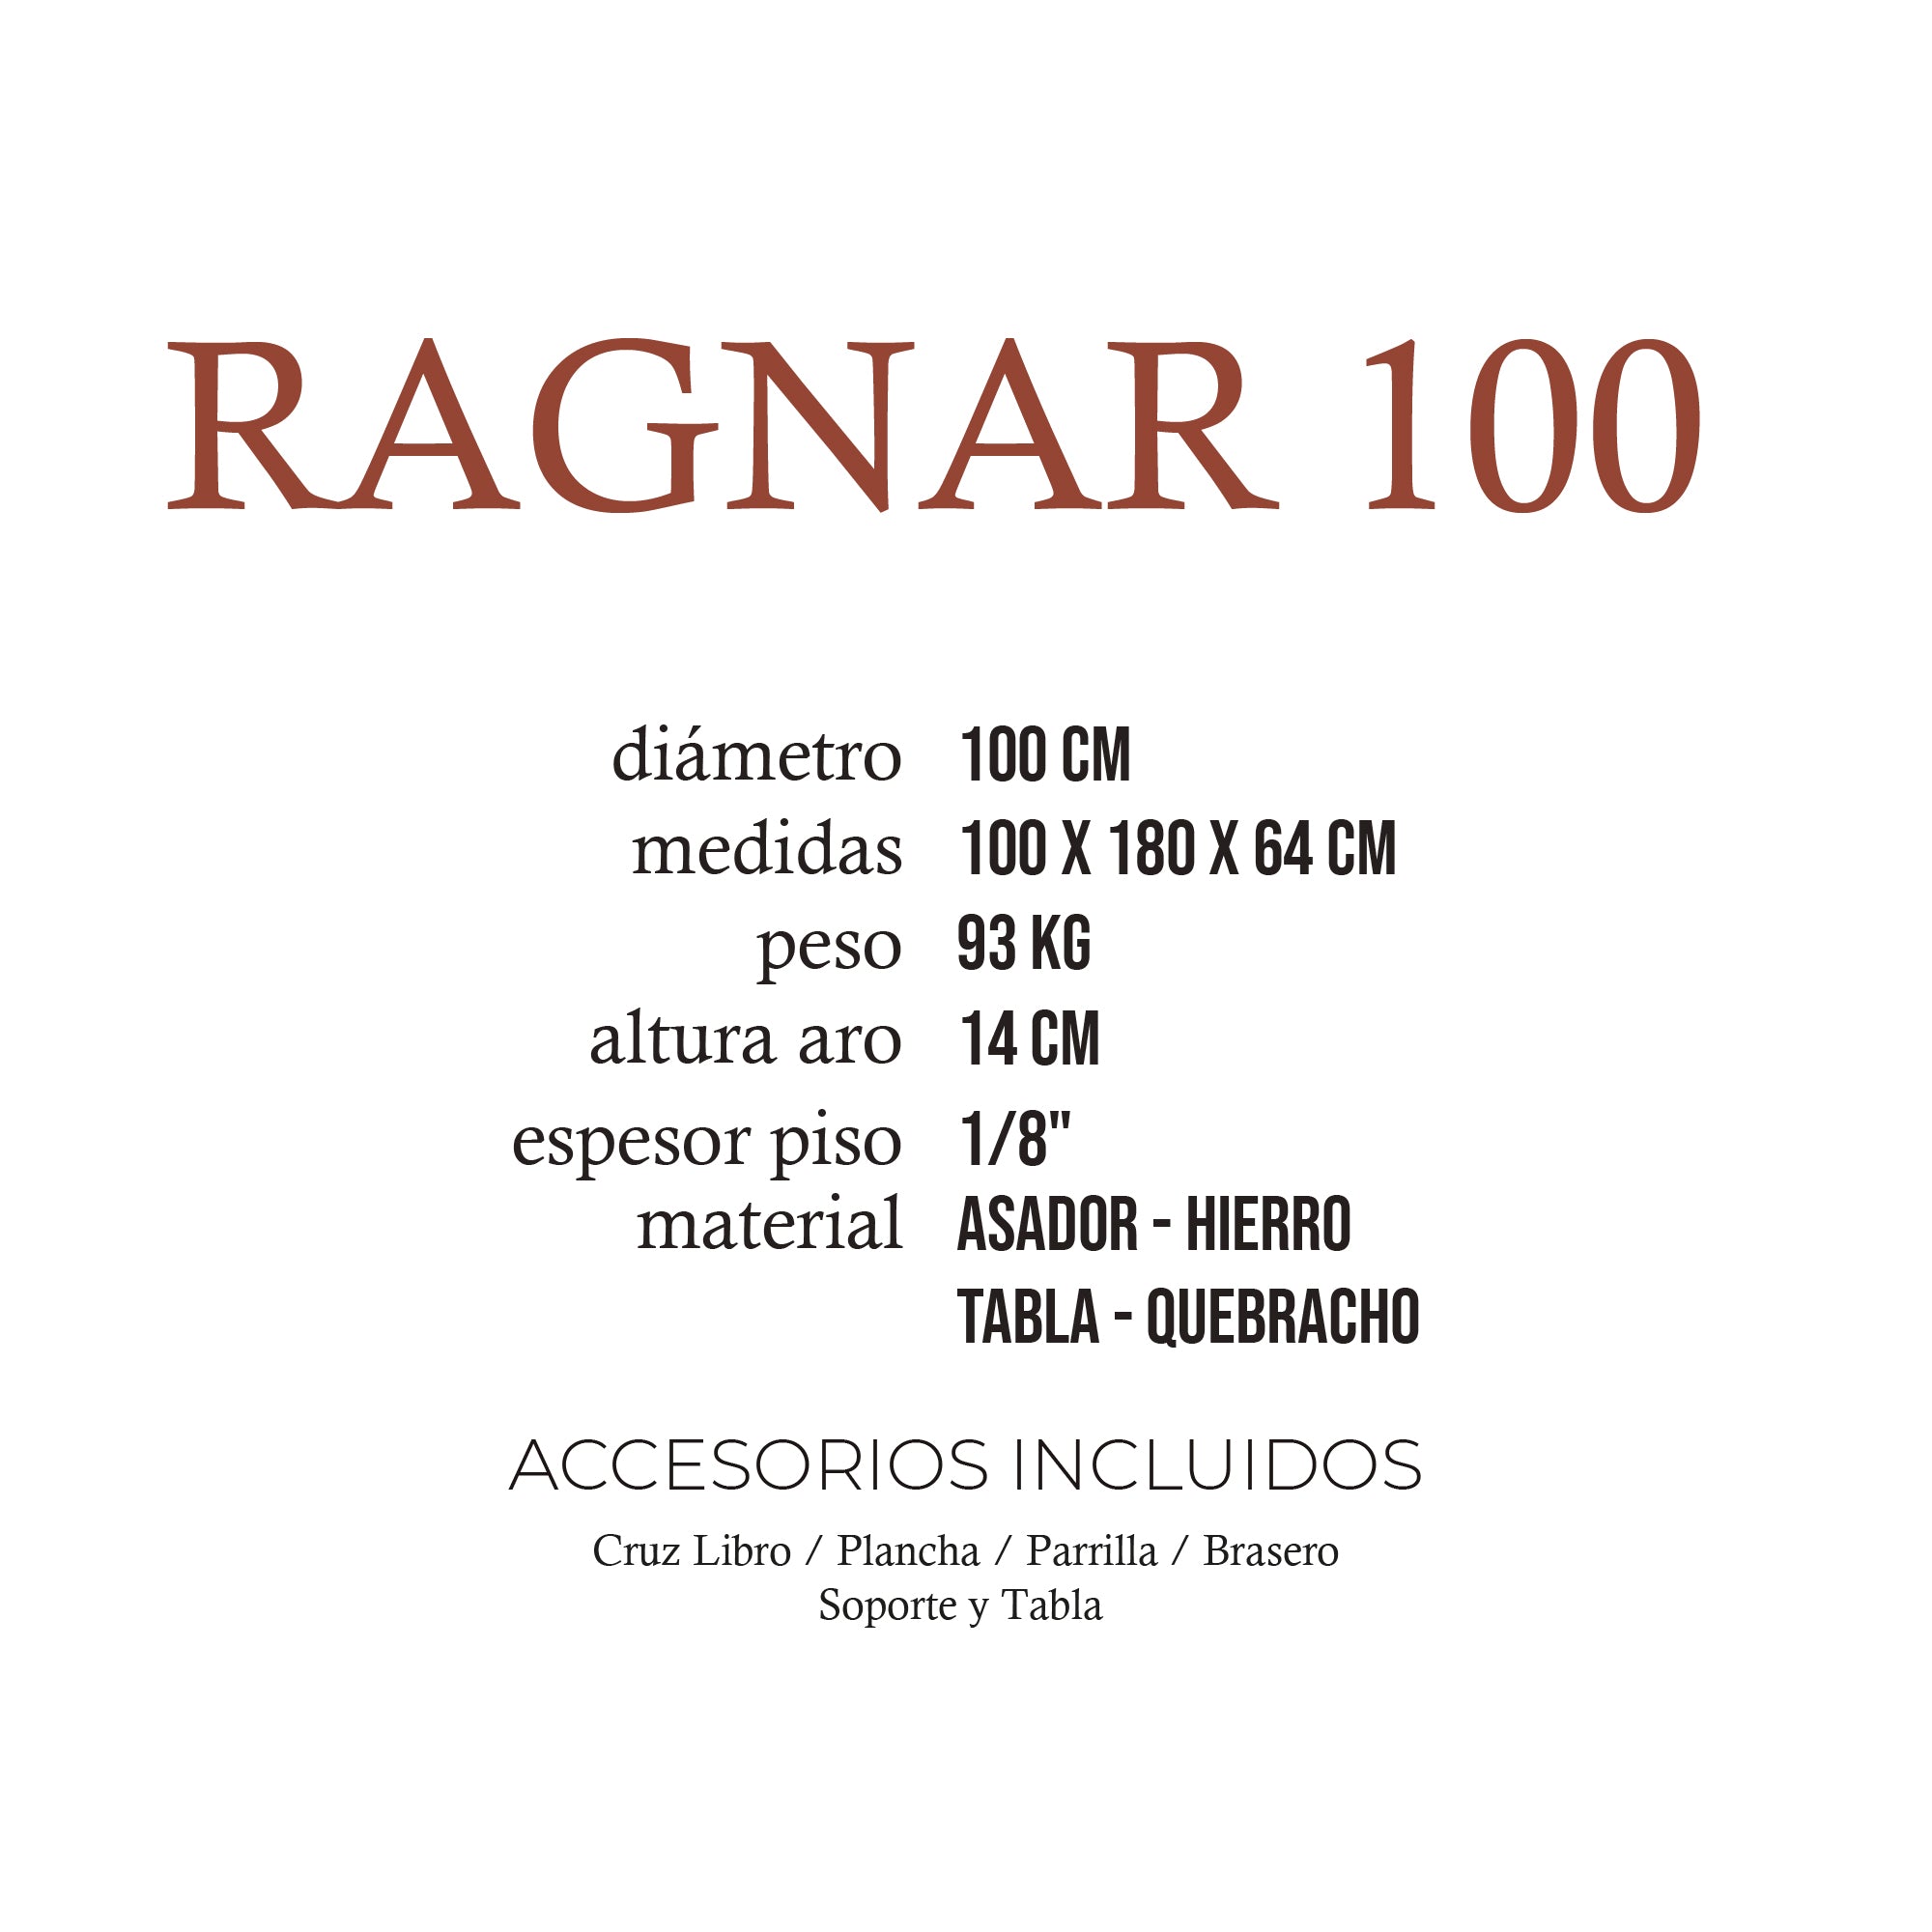 Ragnar 100